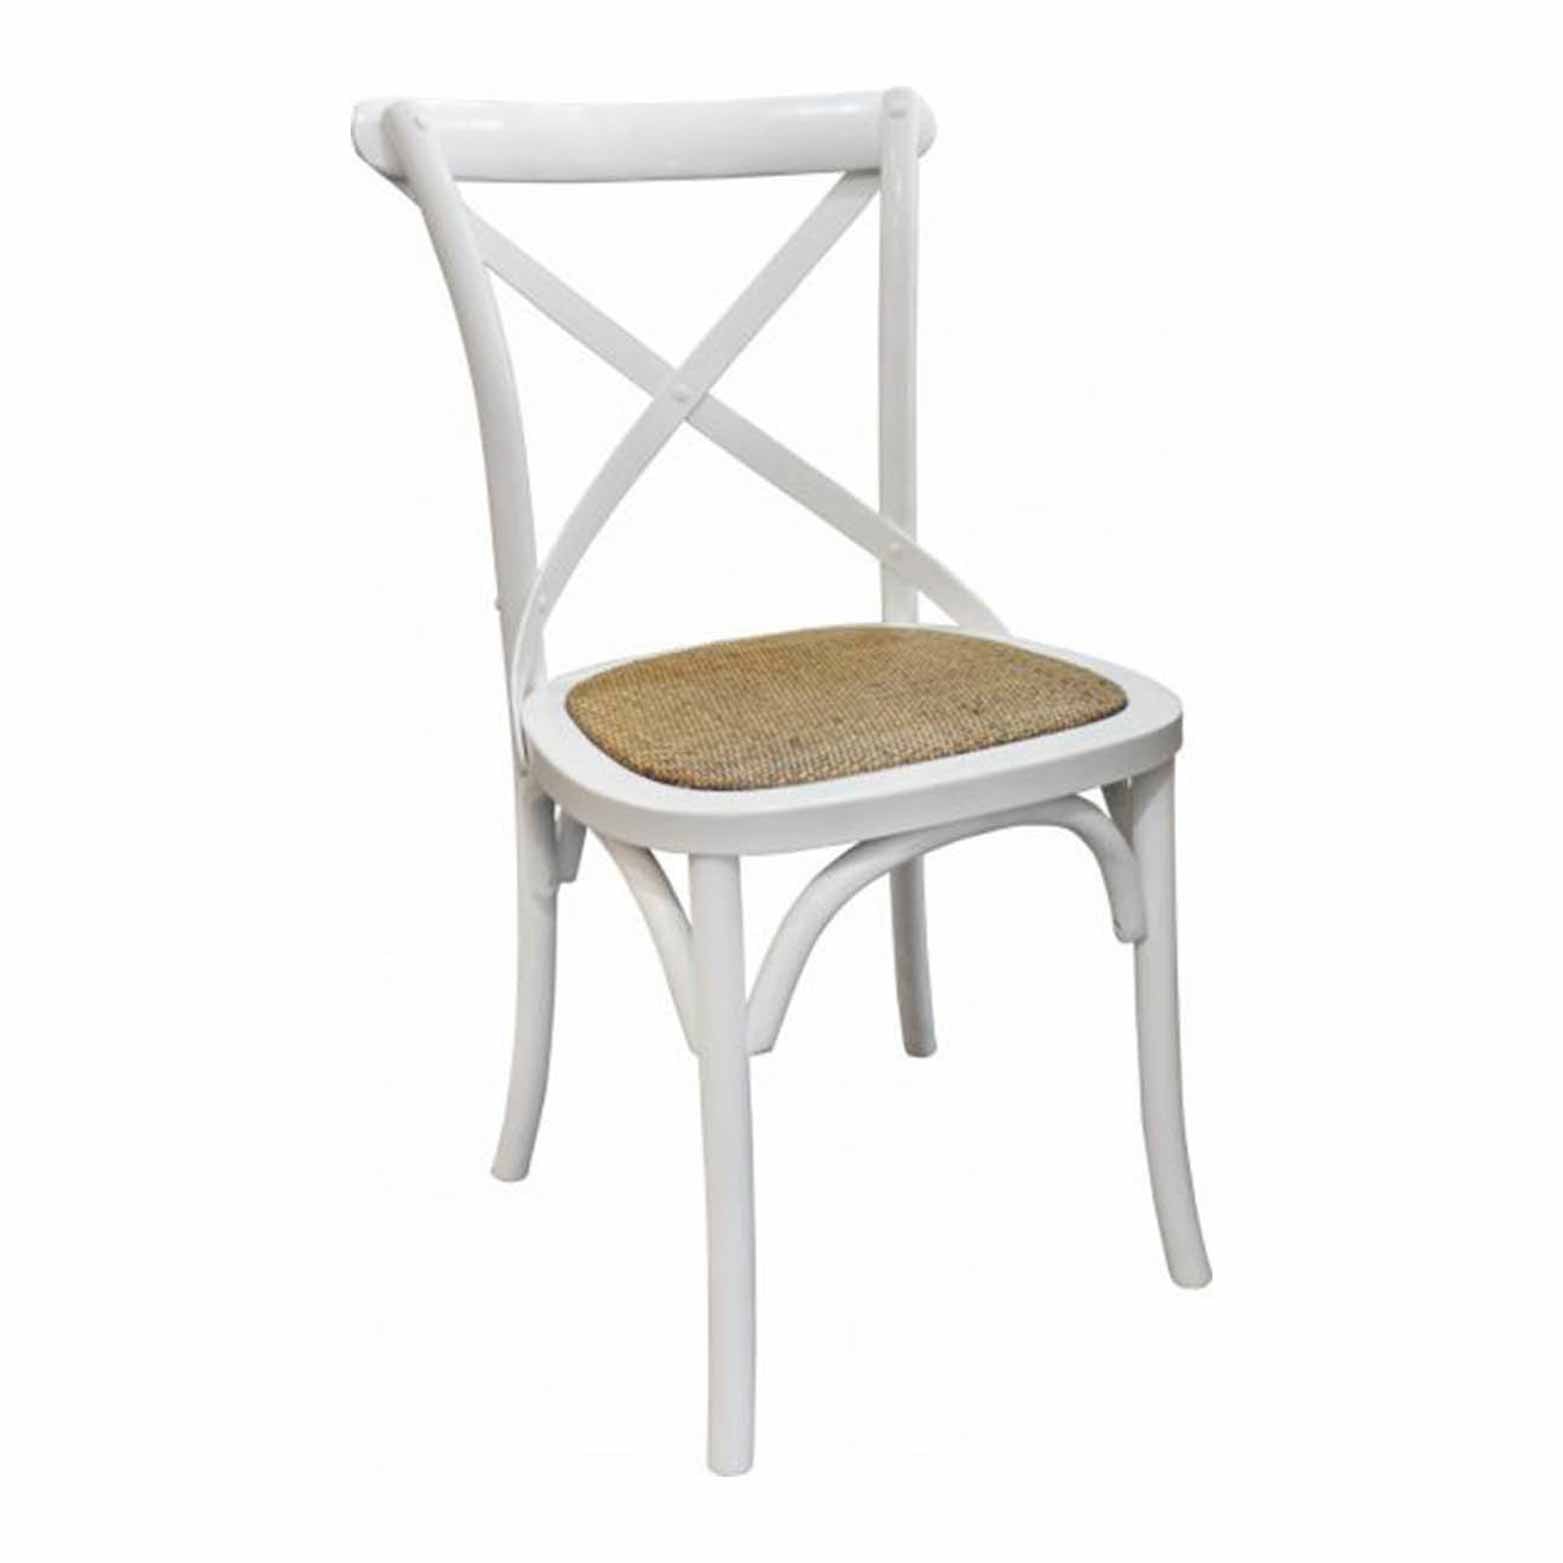 White Cross Back Chair | Darker Rattan Seat